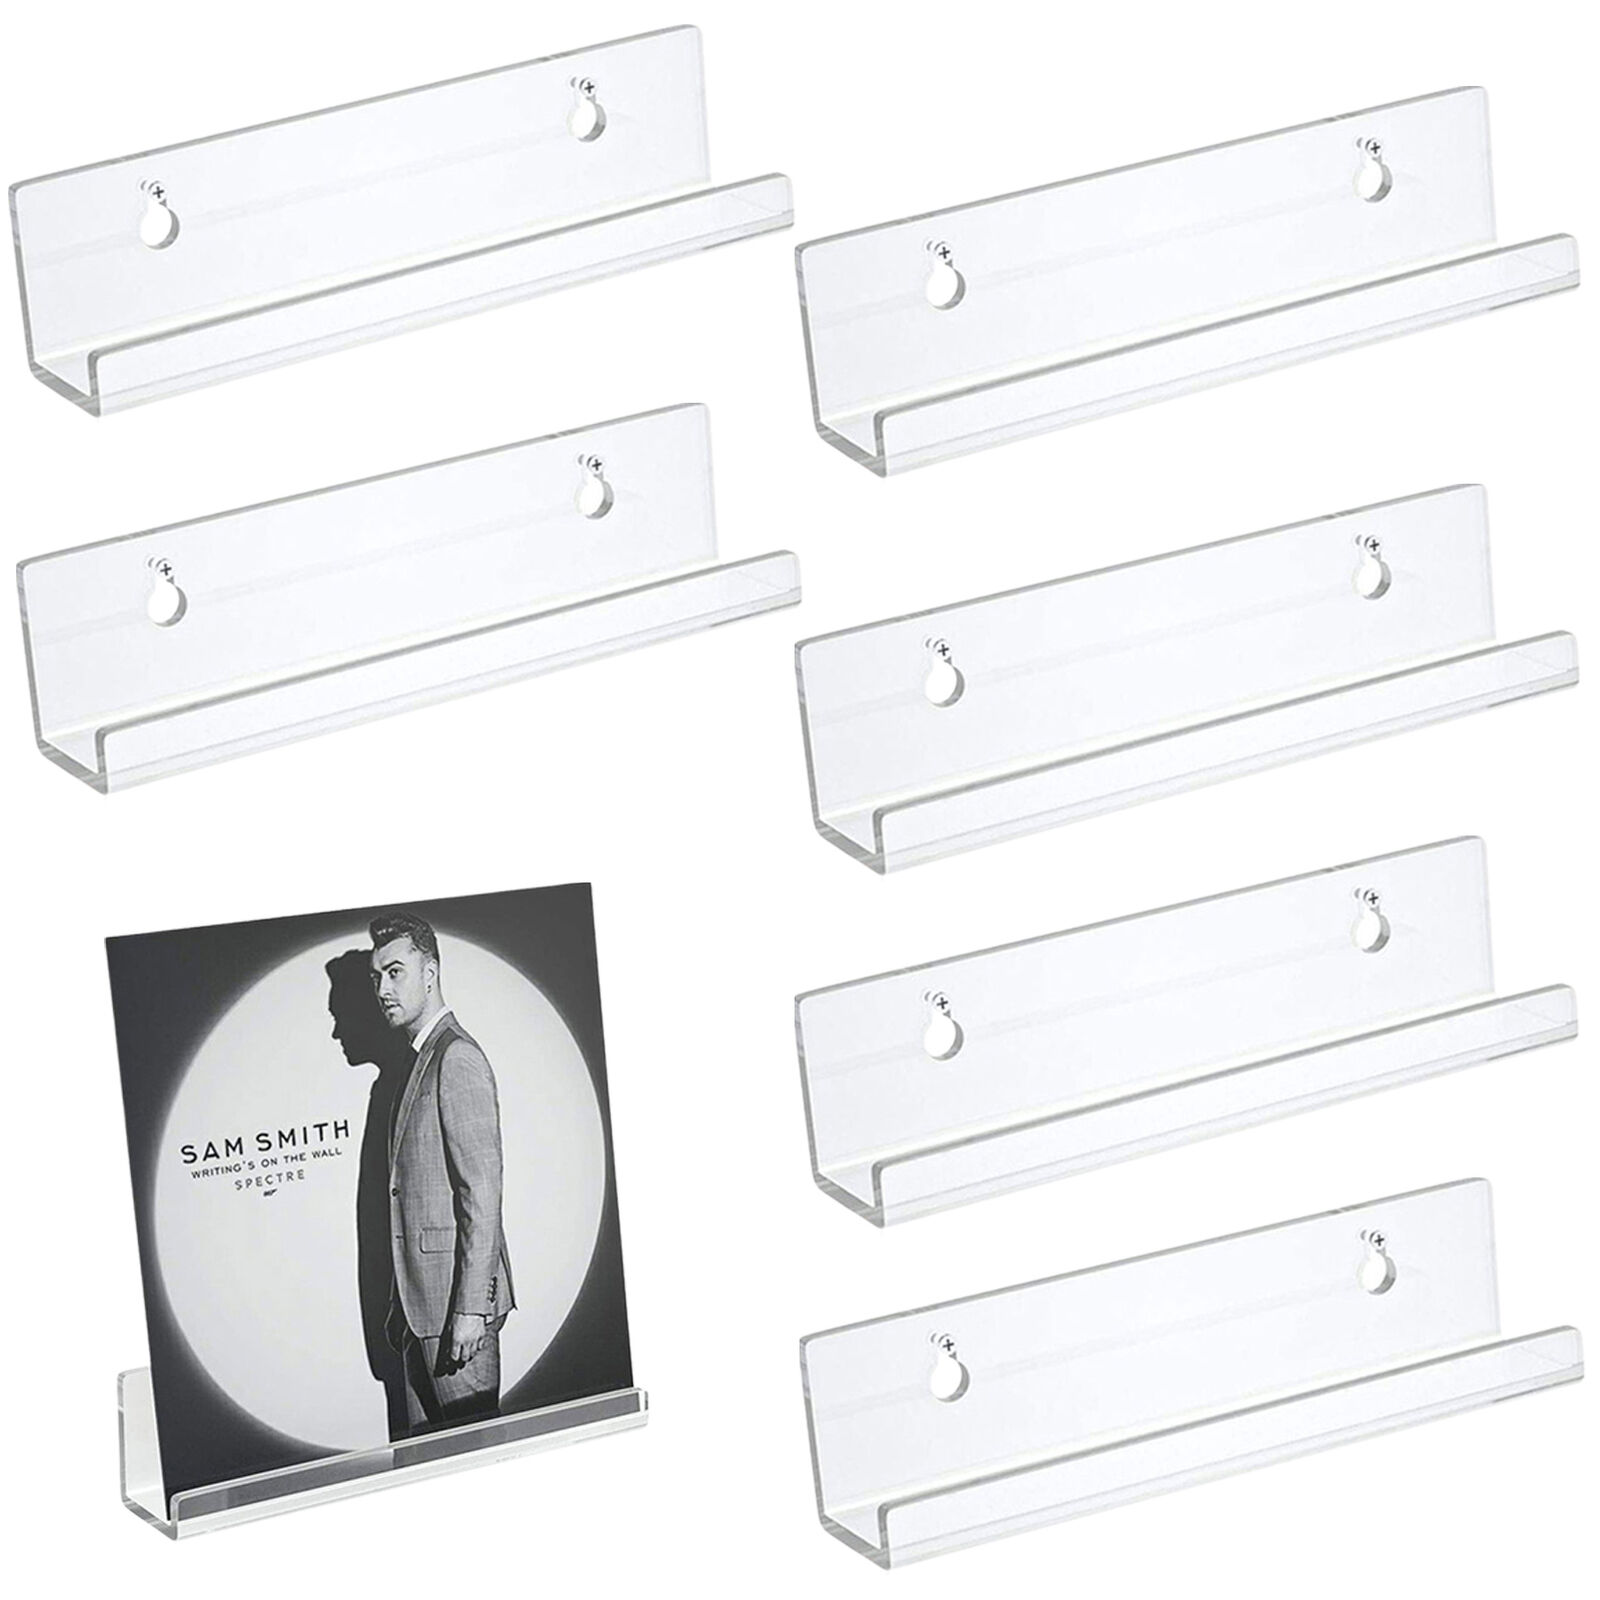 6 Clear Acrylic Record Storage Rack Shelf Wall Mount Album Record Holder Display